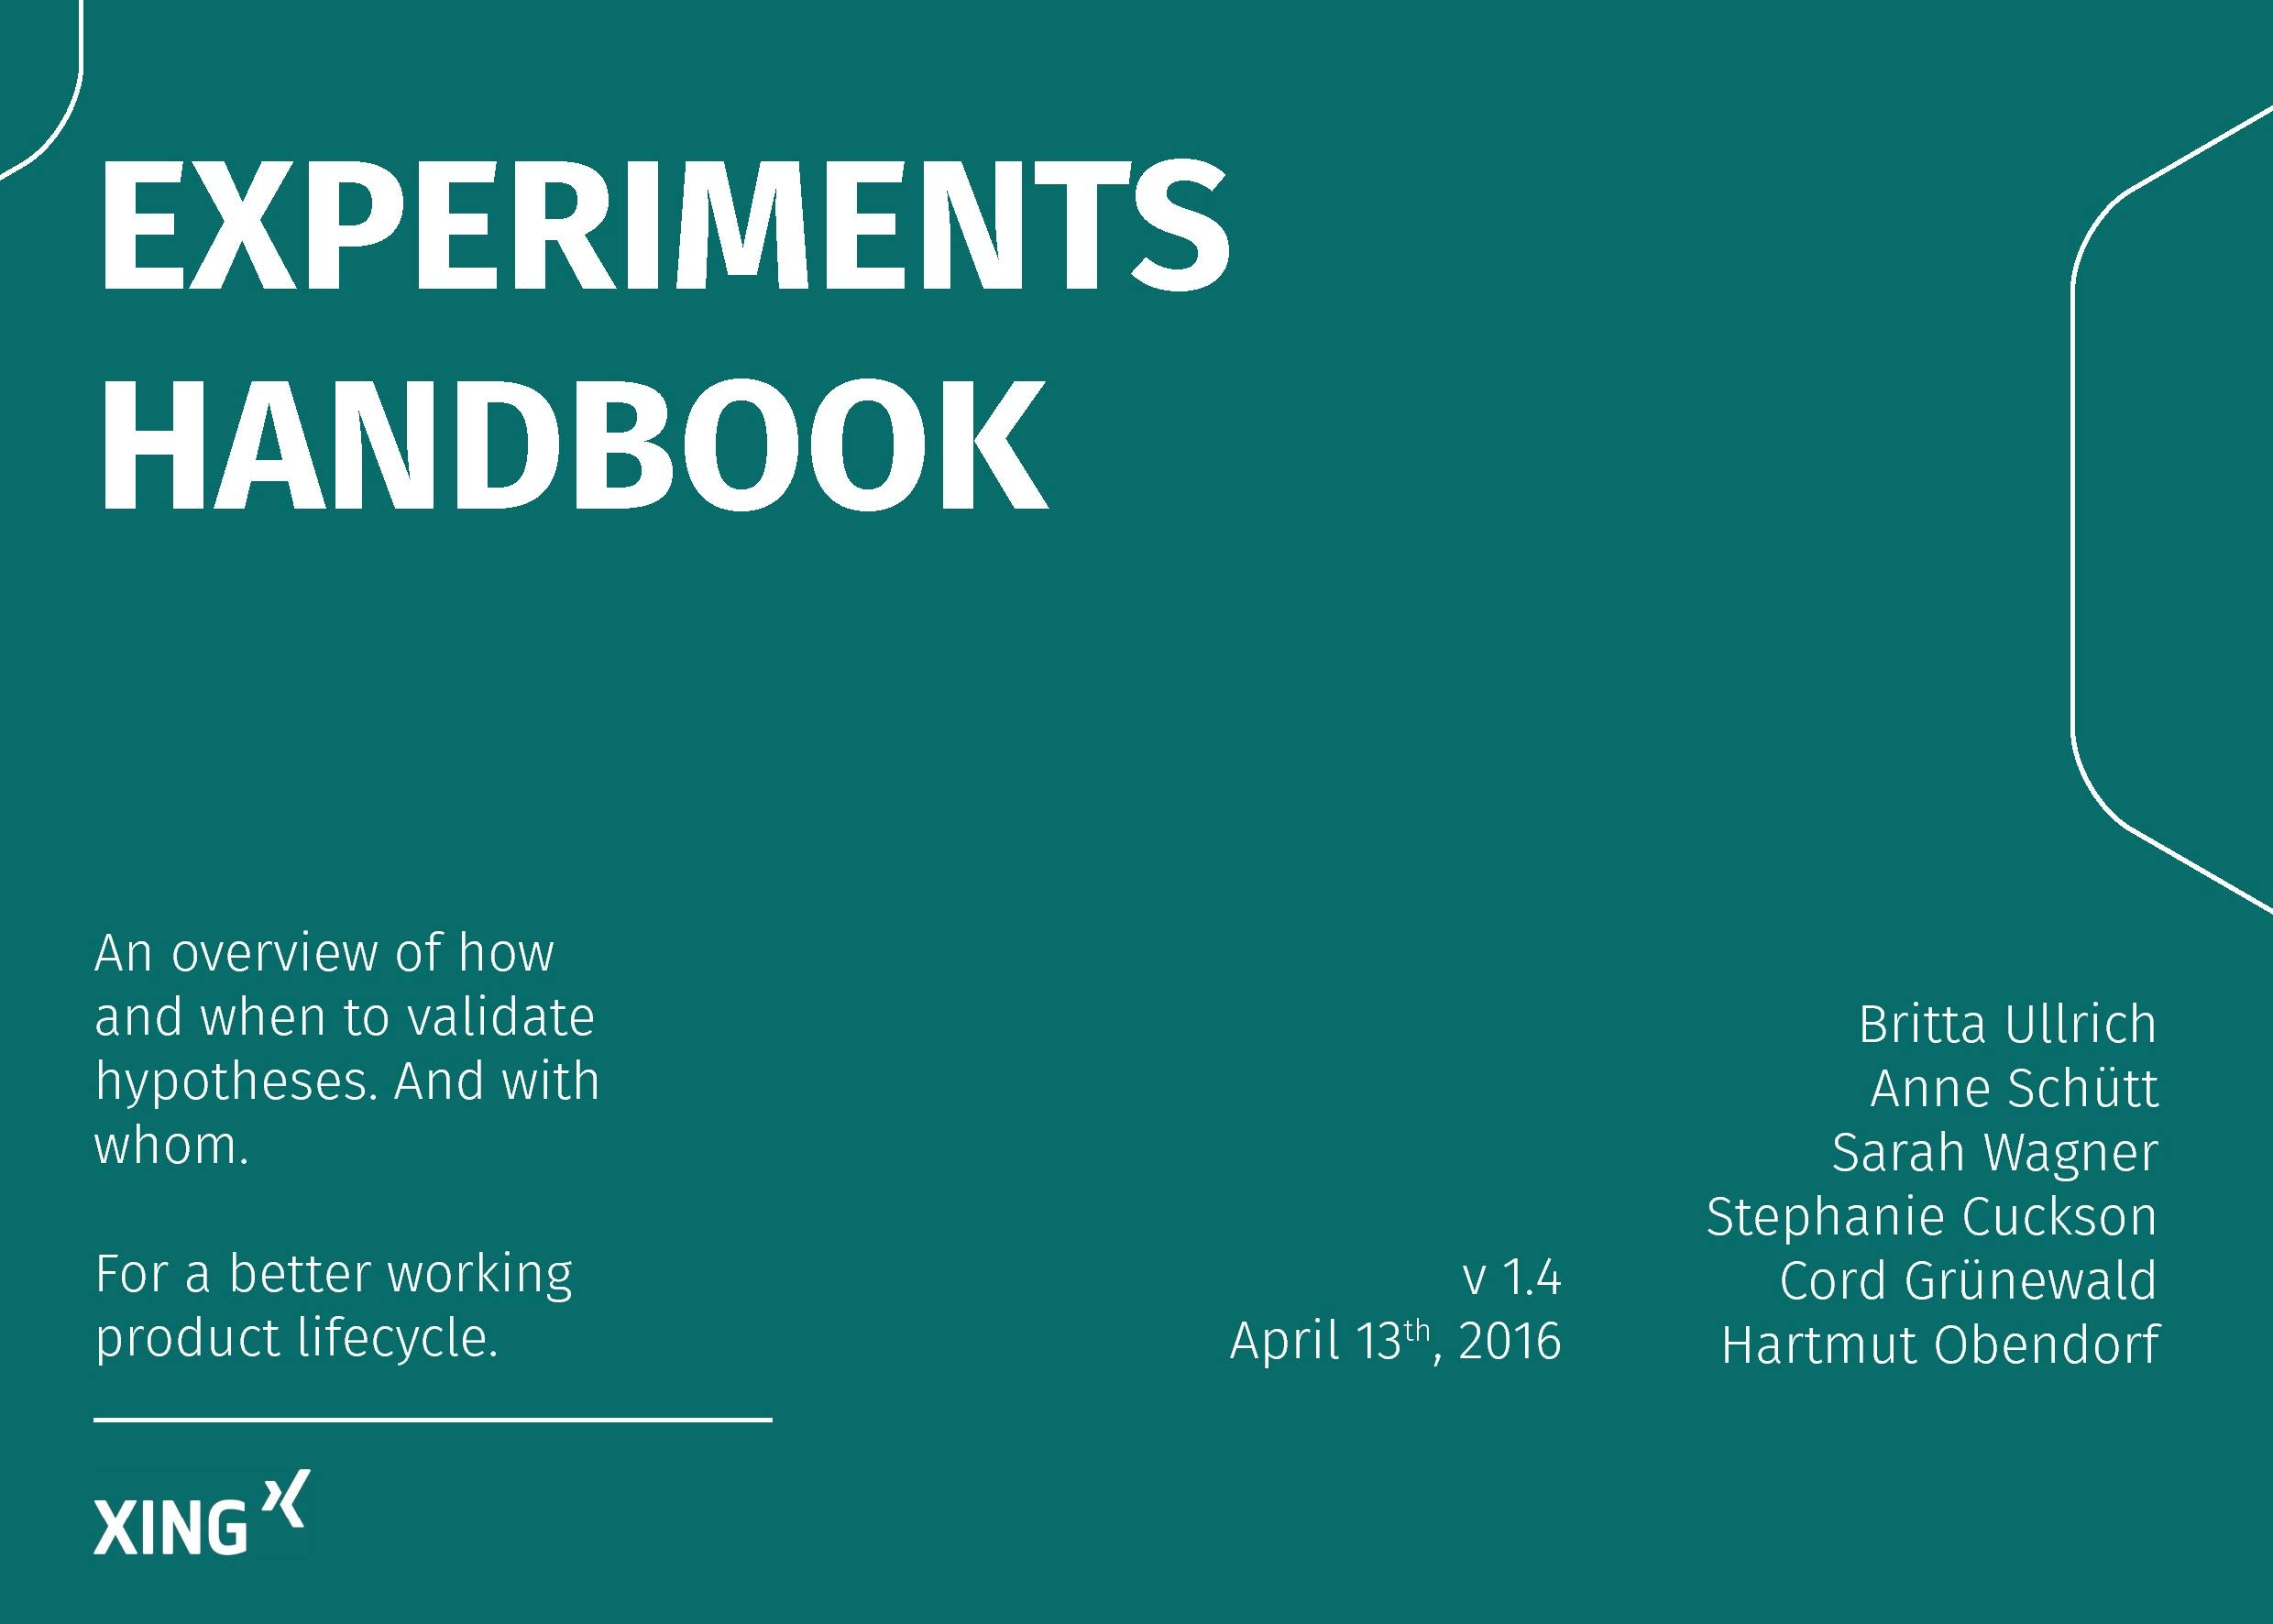 Experiments Handbook - Sarah Wagner, Cord Grünewald, Hartmut Obendorf, Stephanie Cuckson, Britta Ullrich, Anne Schütt